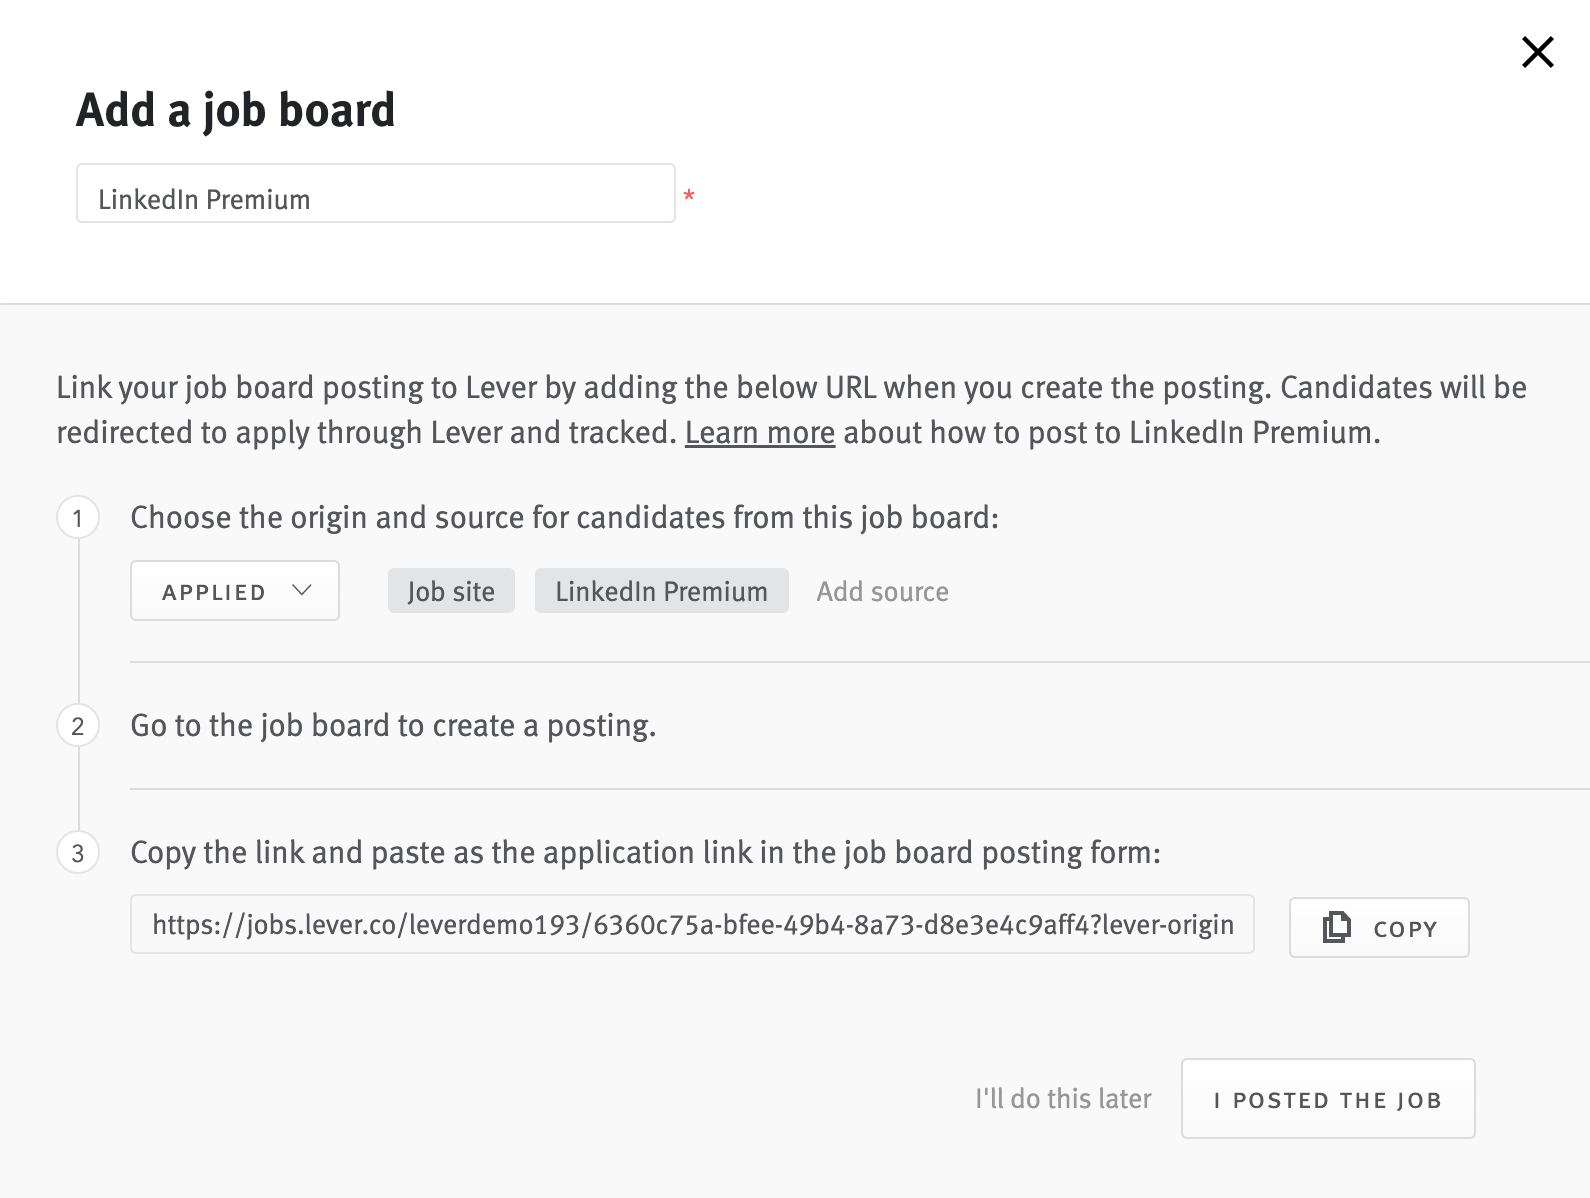 Add job board modal with LinkedIn Premium typed in job board menu